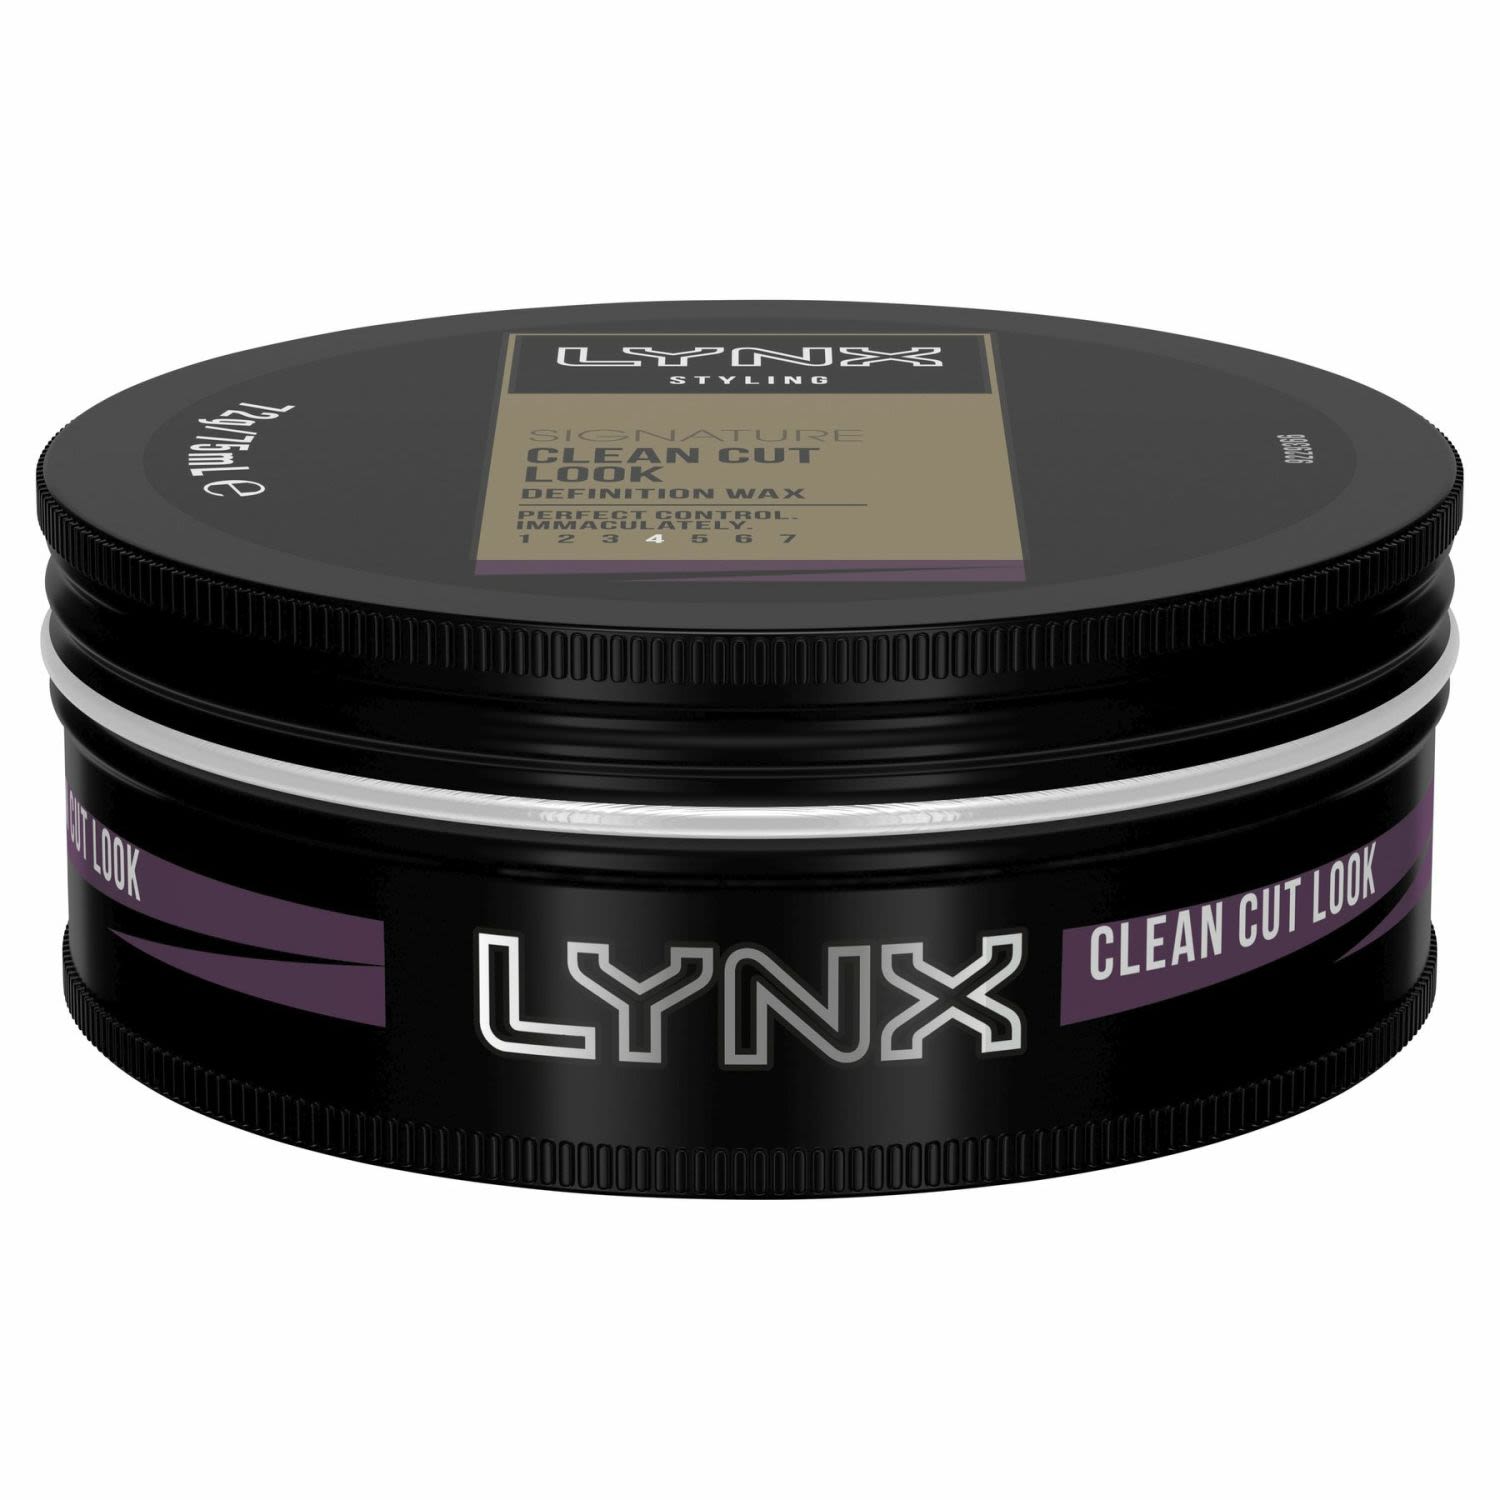 Lynx Hair Styling Wax Clean Cut Look, 75 Millilitre